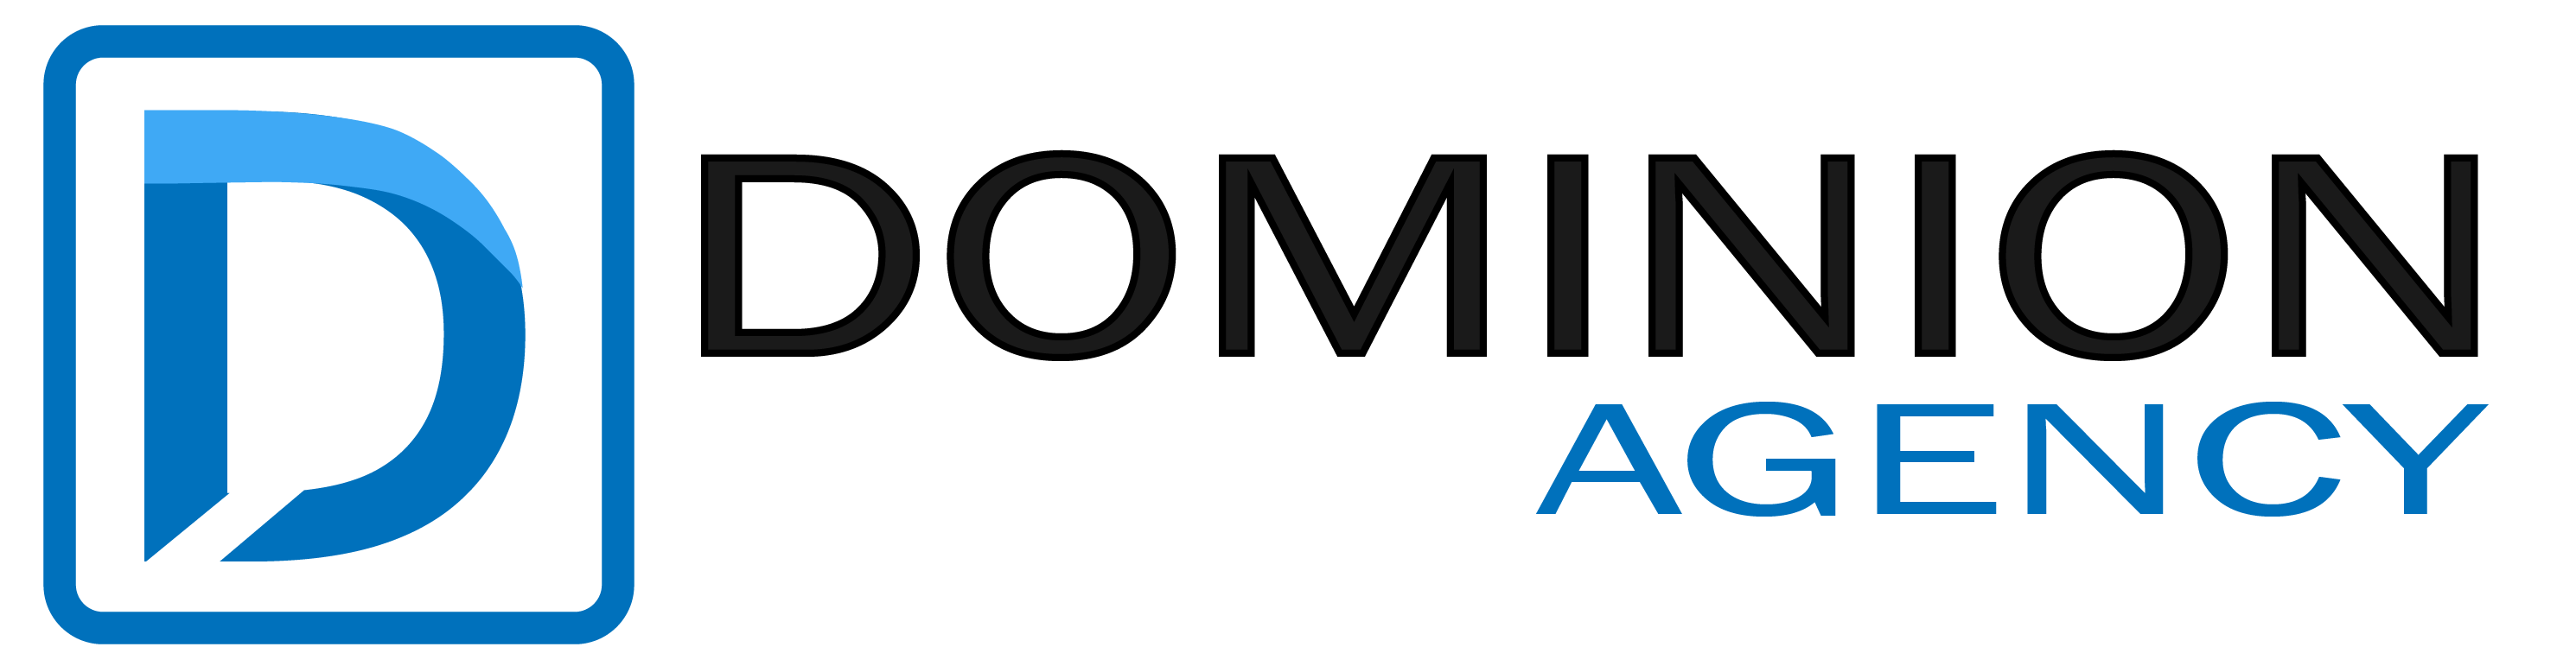 Dominion Agency